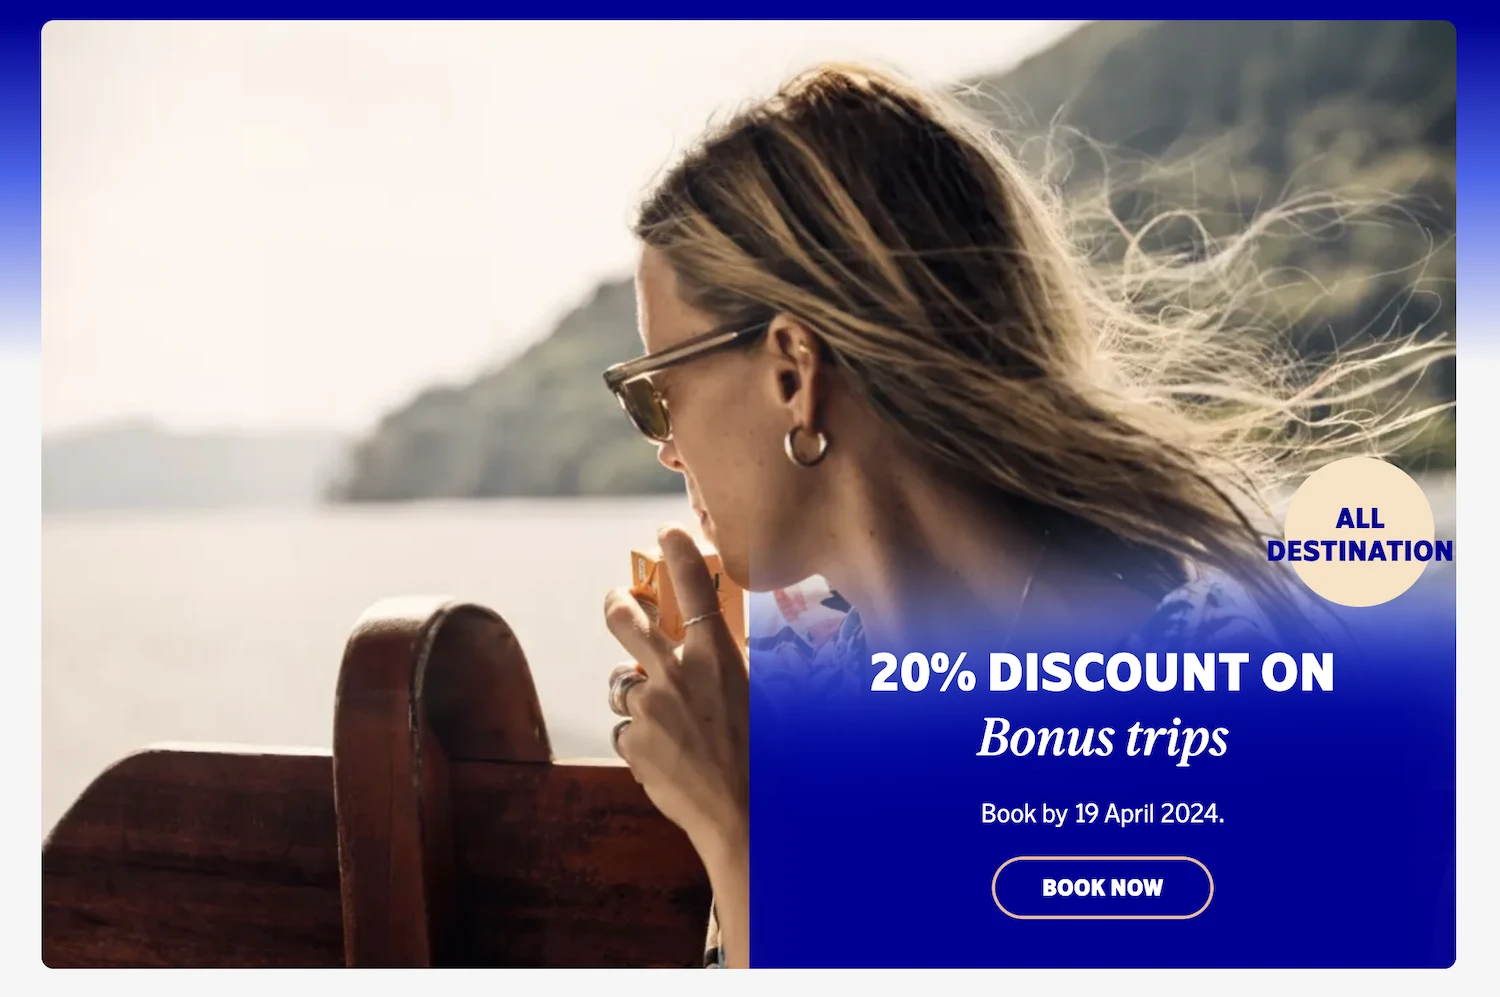 Get a 20% discount on SAS EuroBonus award trips until April 19th.